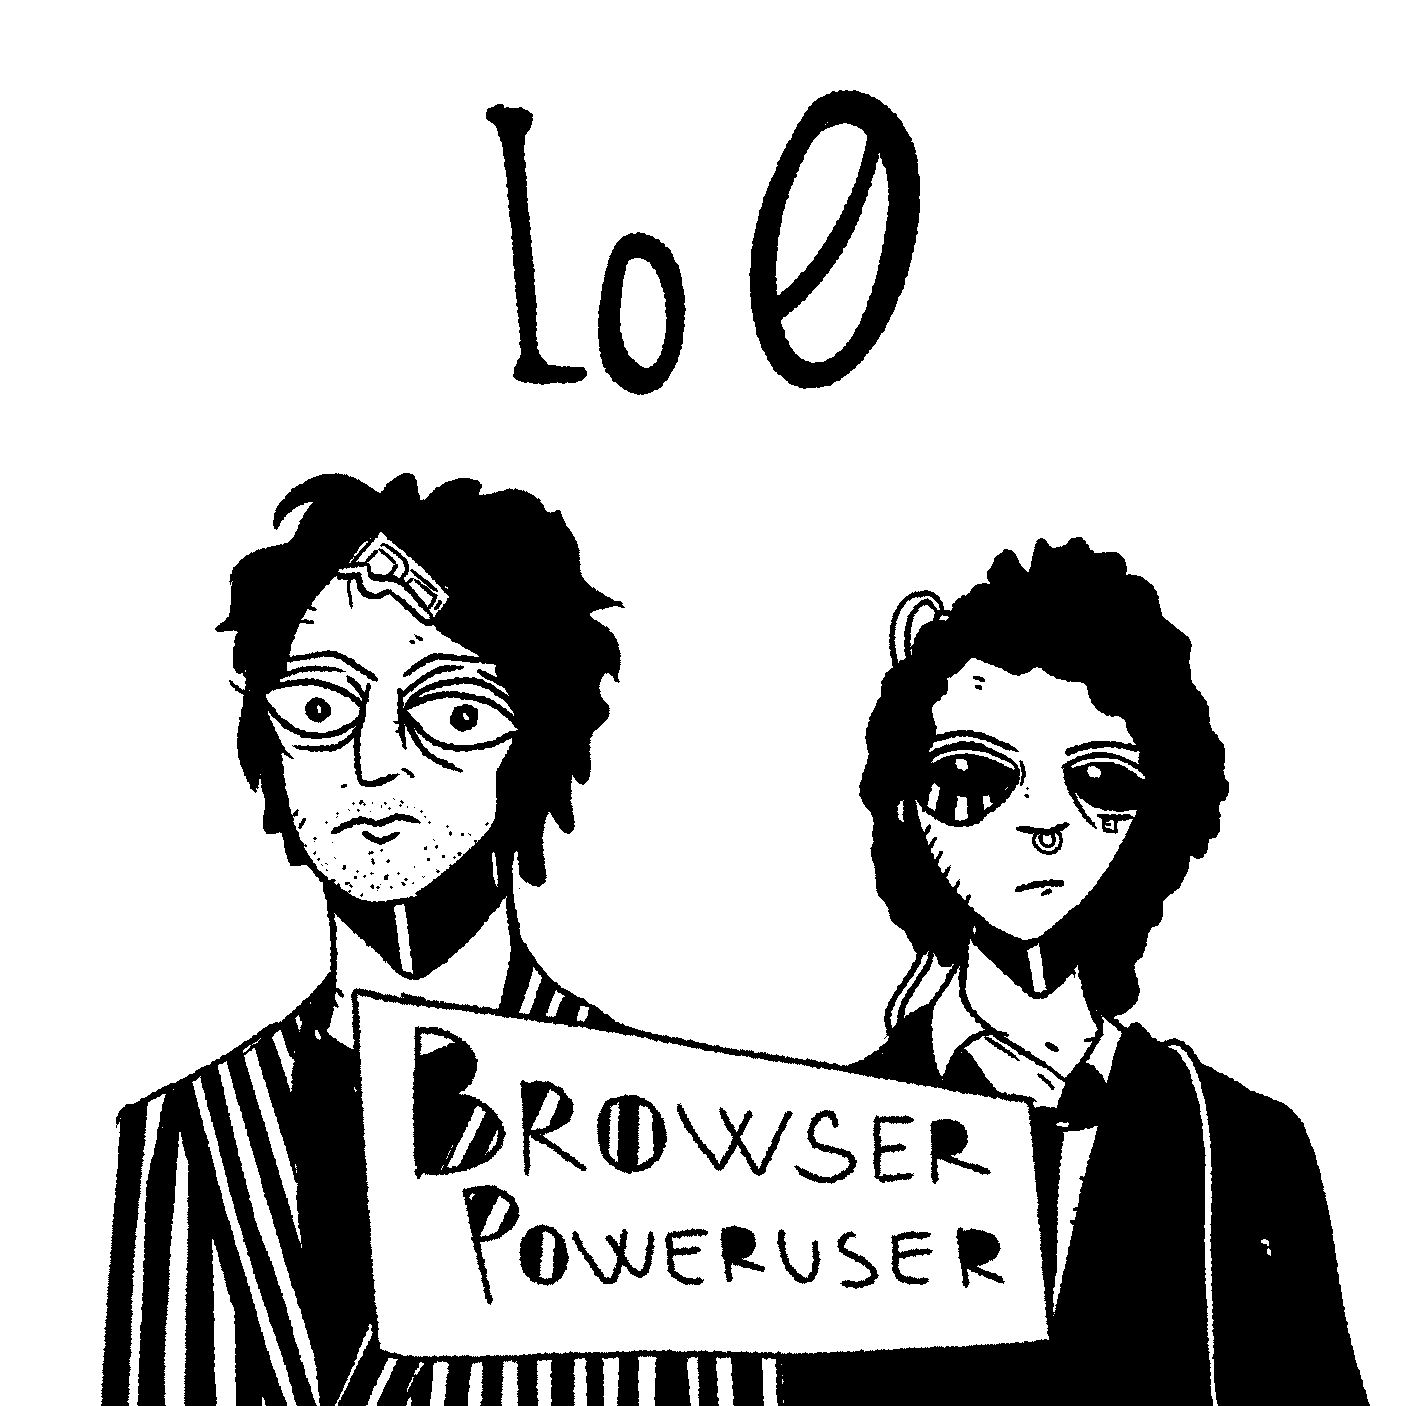 lo0 - browser poweruser